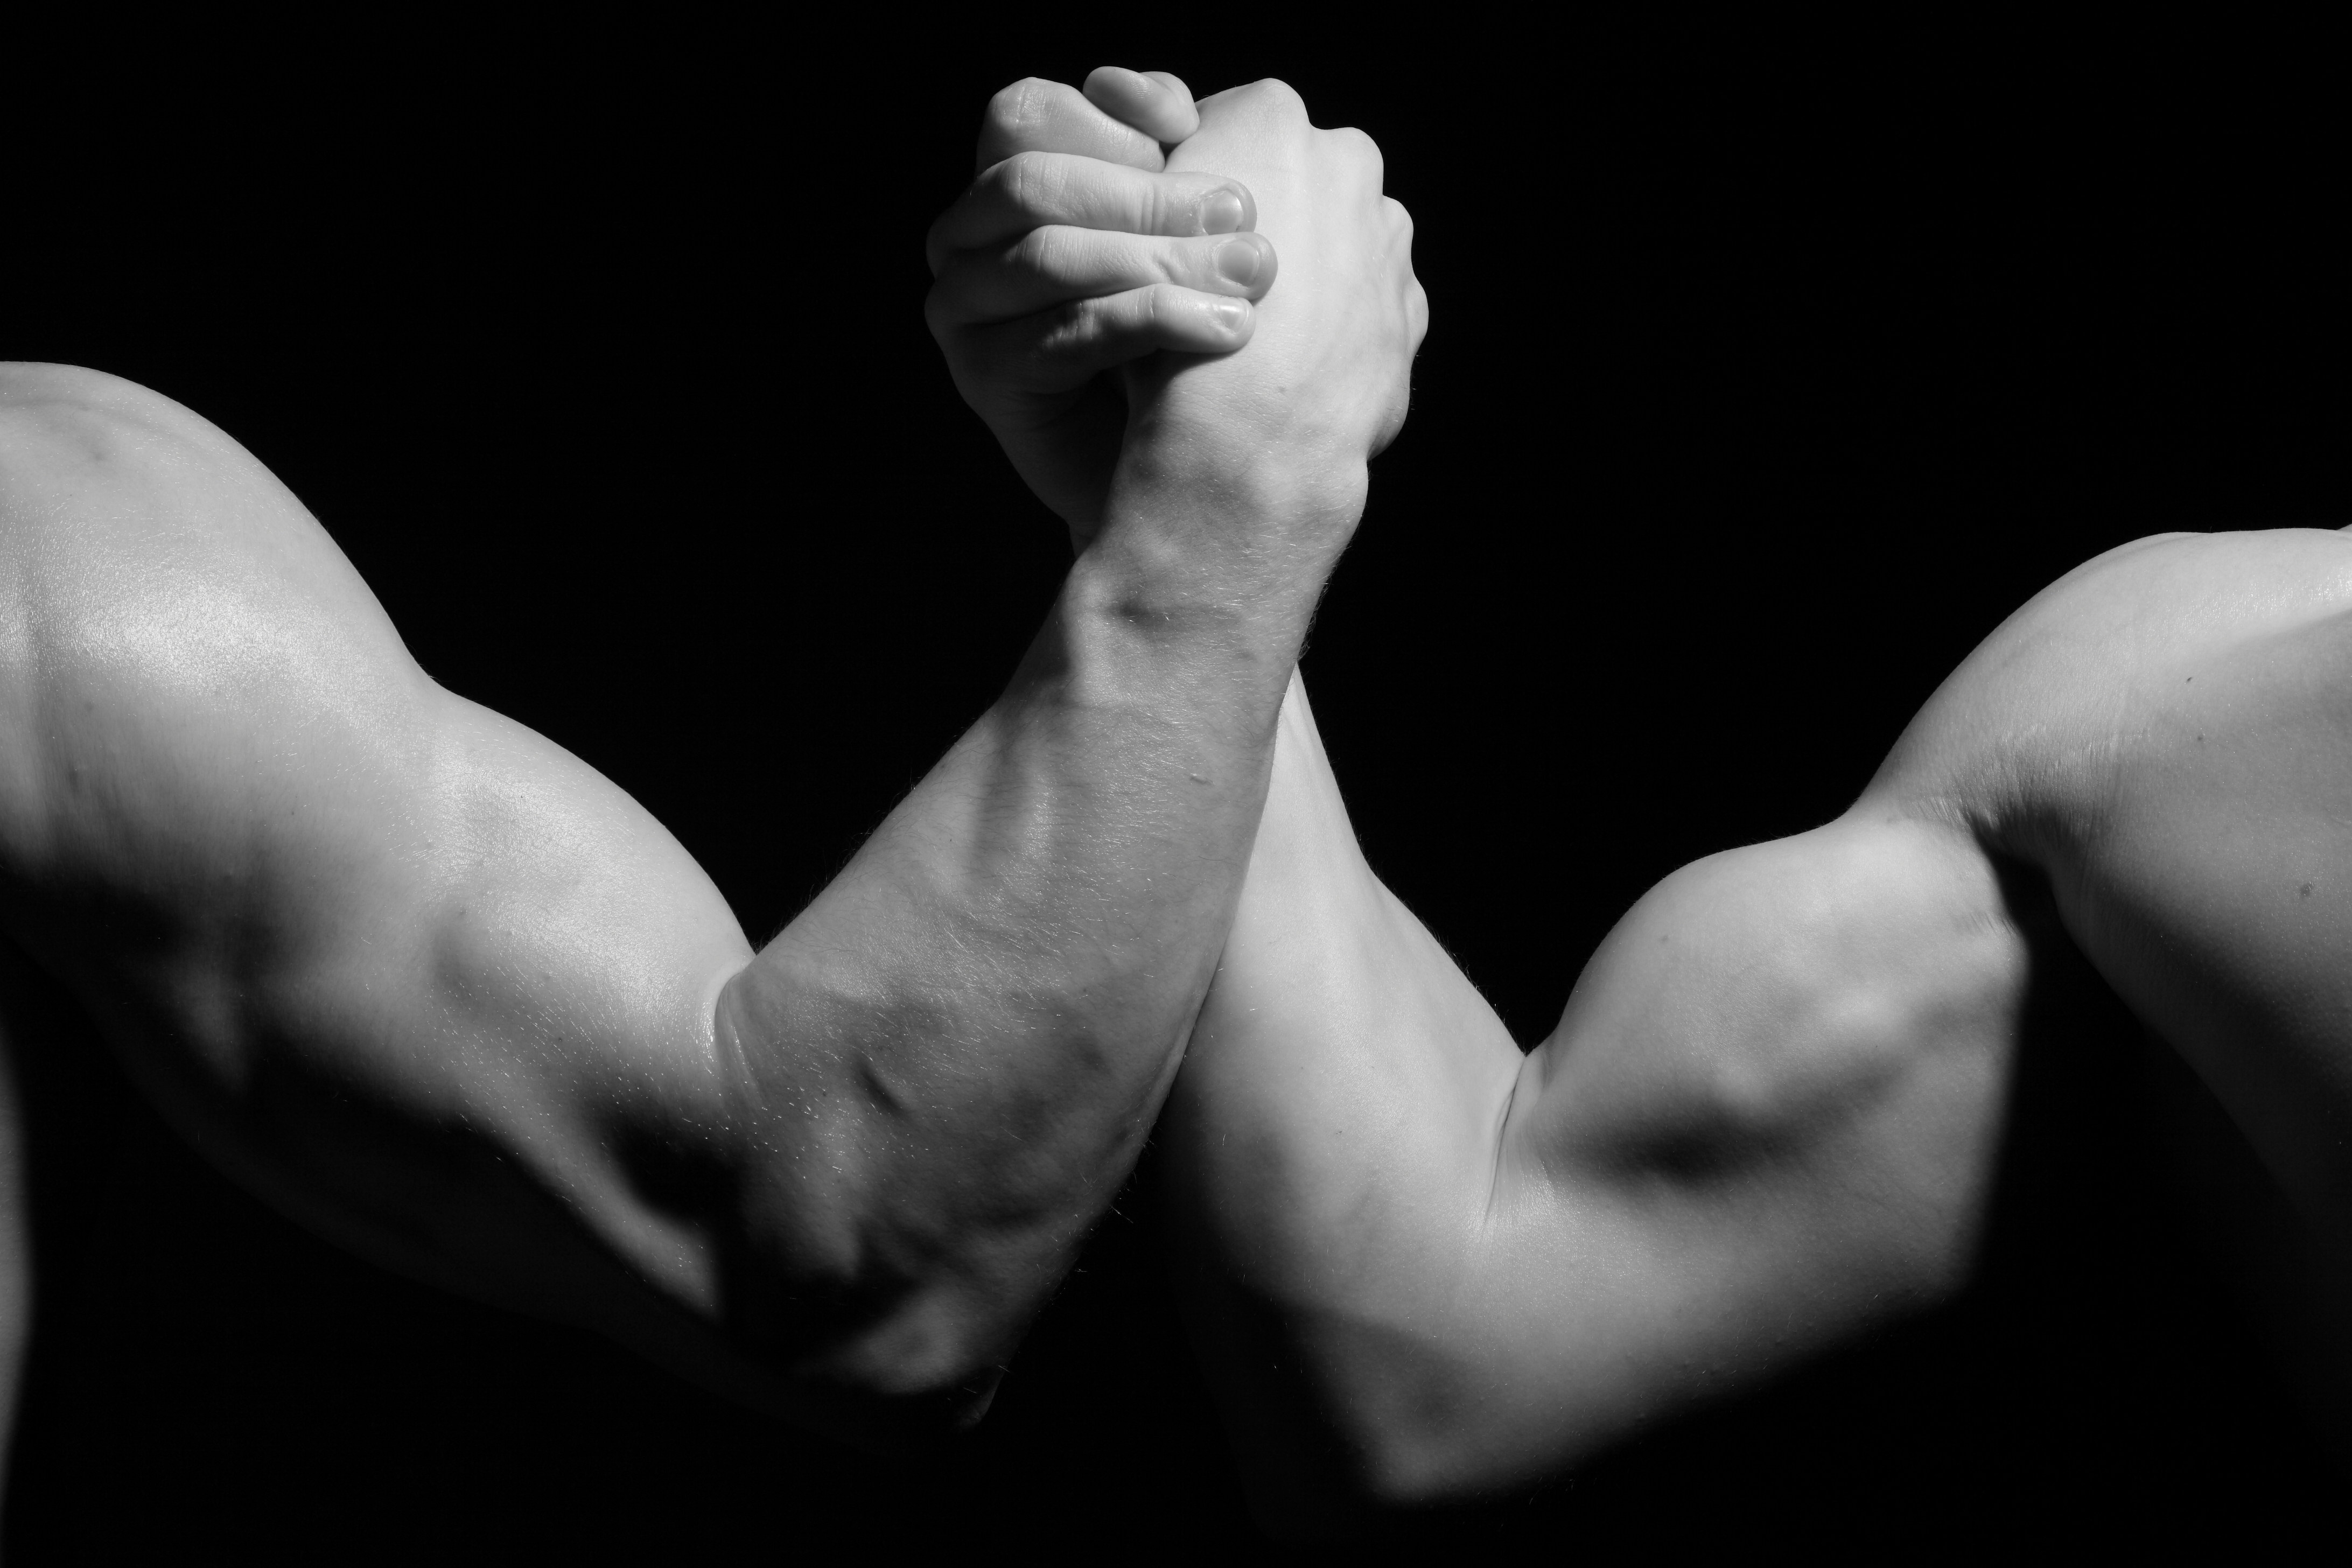 fight, arm wrestling, black and white, men, sports, hands, struggle, biceps